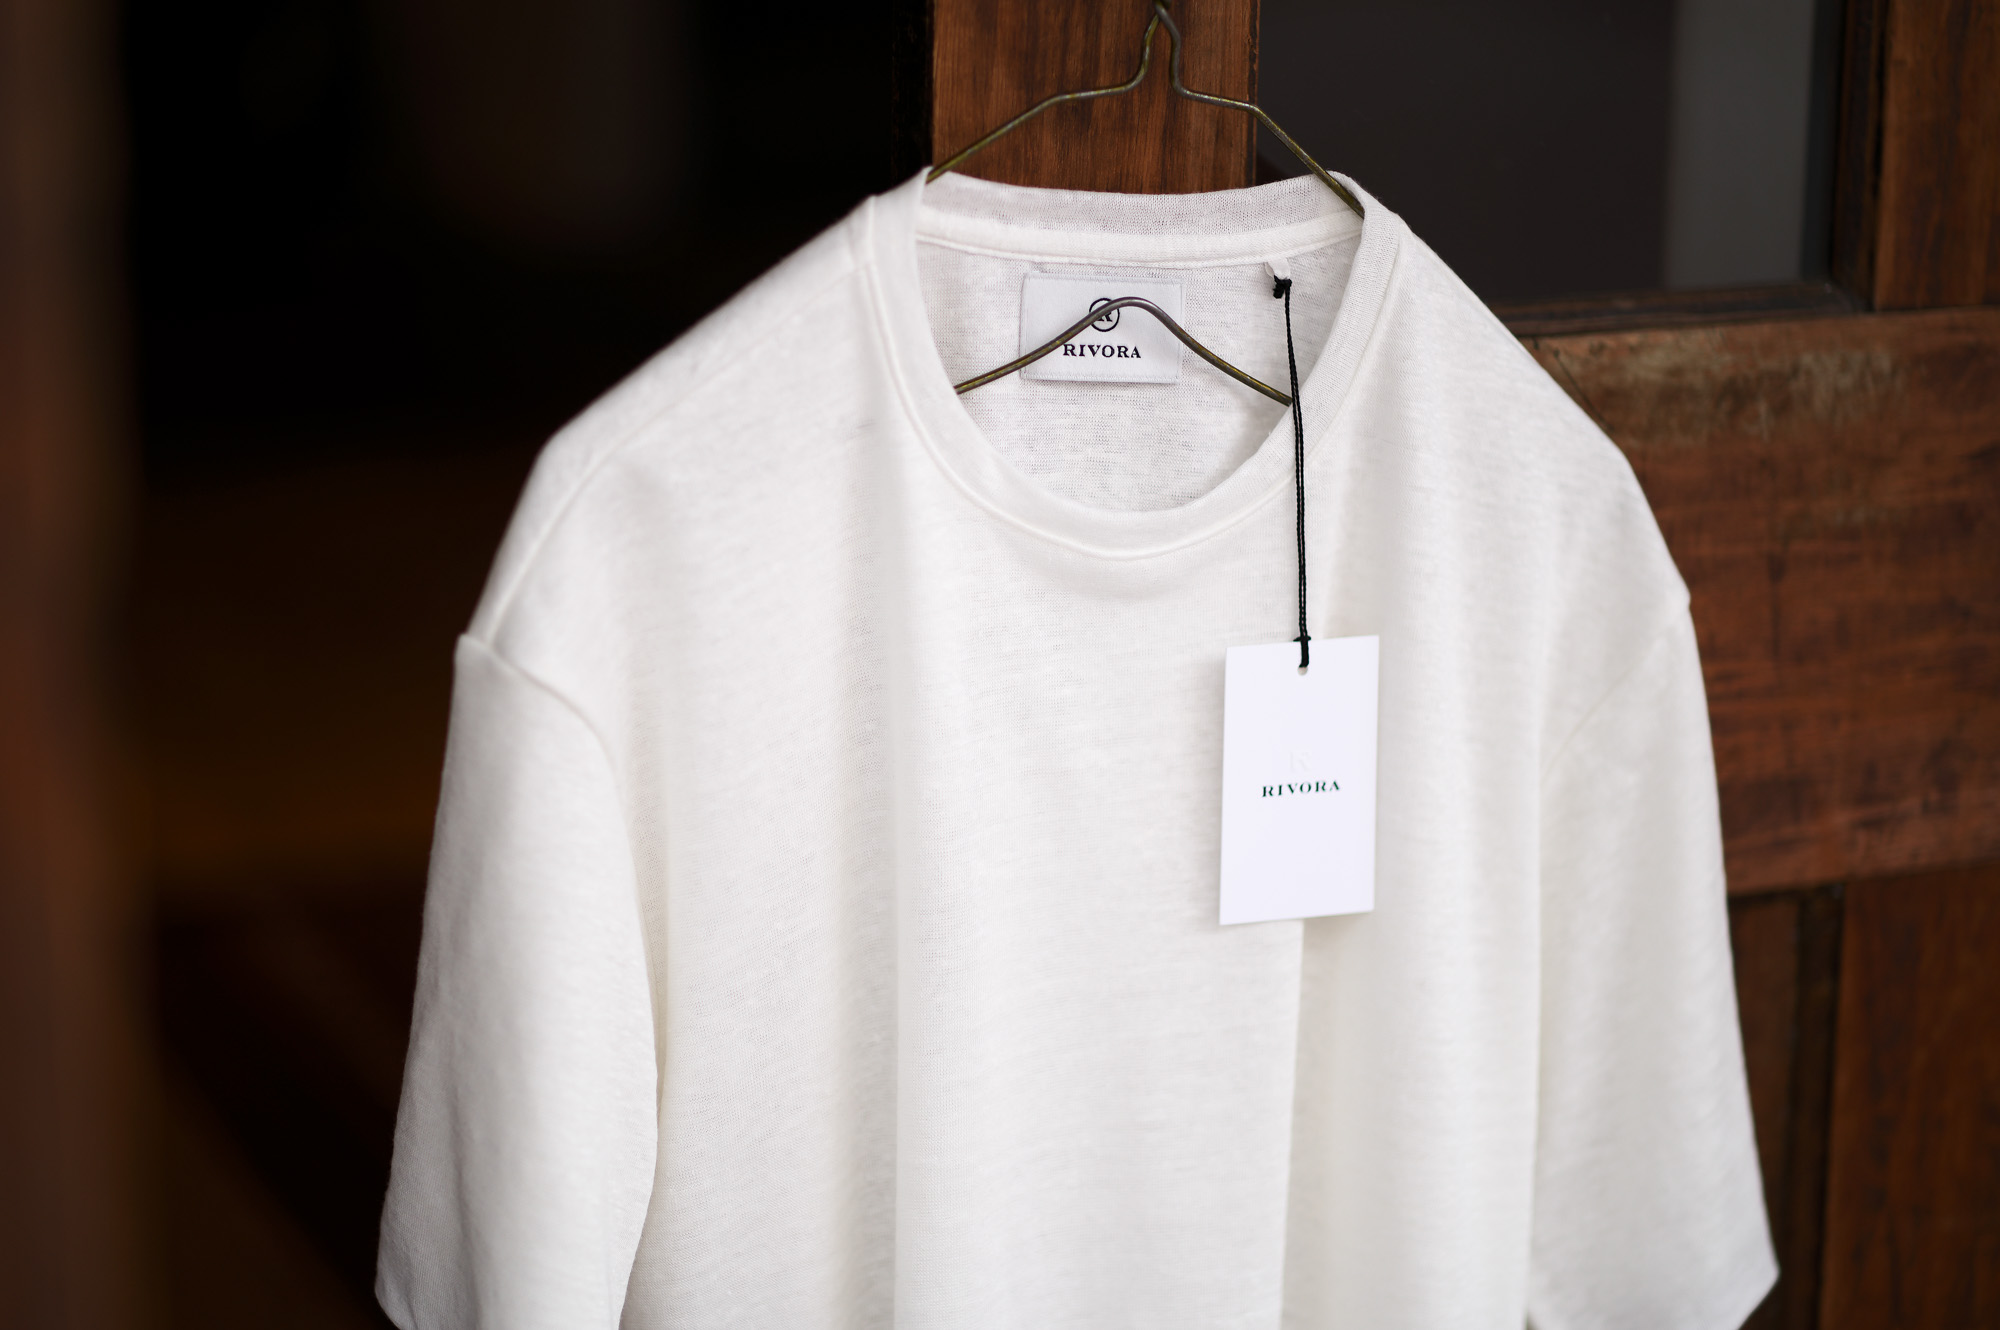 RIVORA (リヴォラ) Vintage Linen Layered T-Shirts ヴィンテージ リネン レイヤード Tシャツ WHITE (ホワイト・030) MADE IN JAPAN (日本製) 2023 春夏新作  【入荷しました】【フリー分発売開始】愛知 名古屋 Alto e Diritto altoediritto アルトエデリット